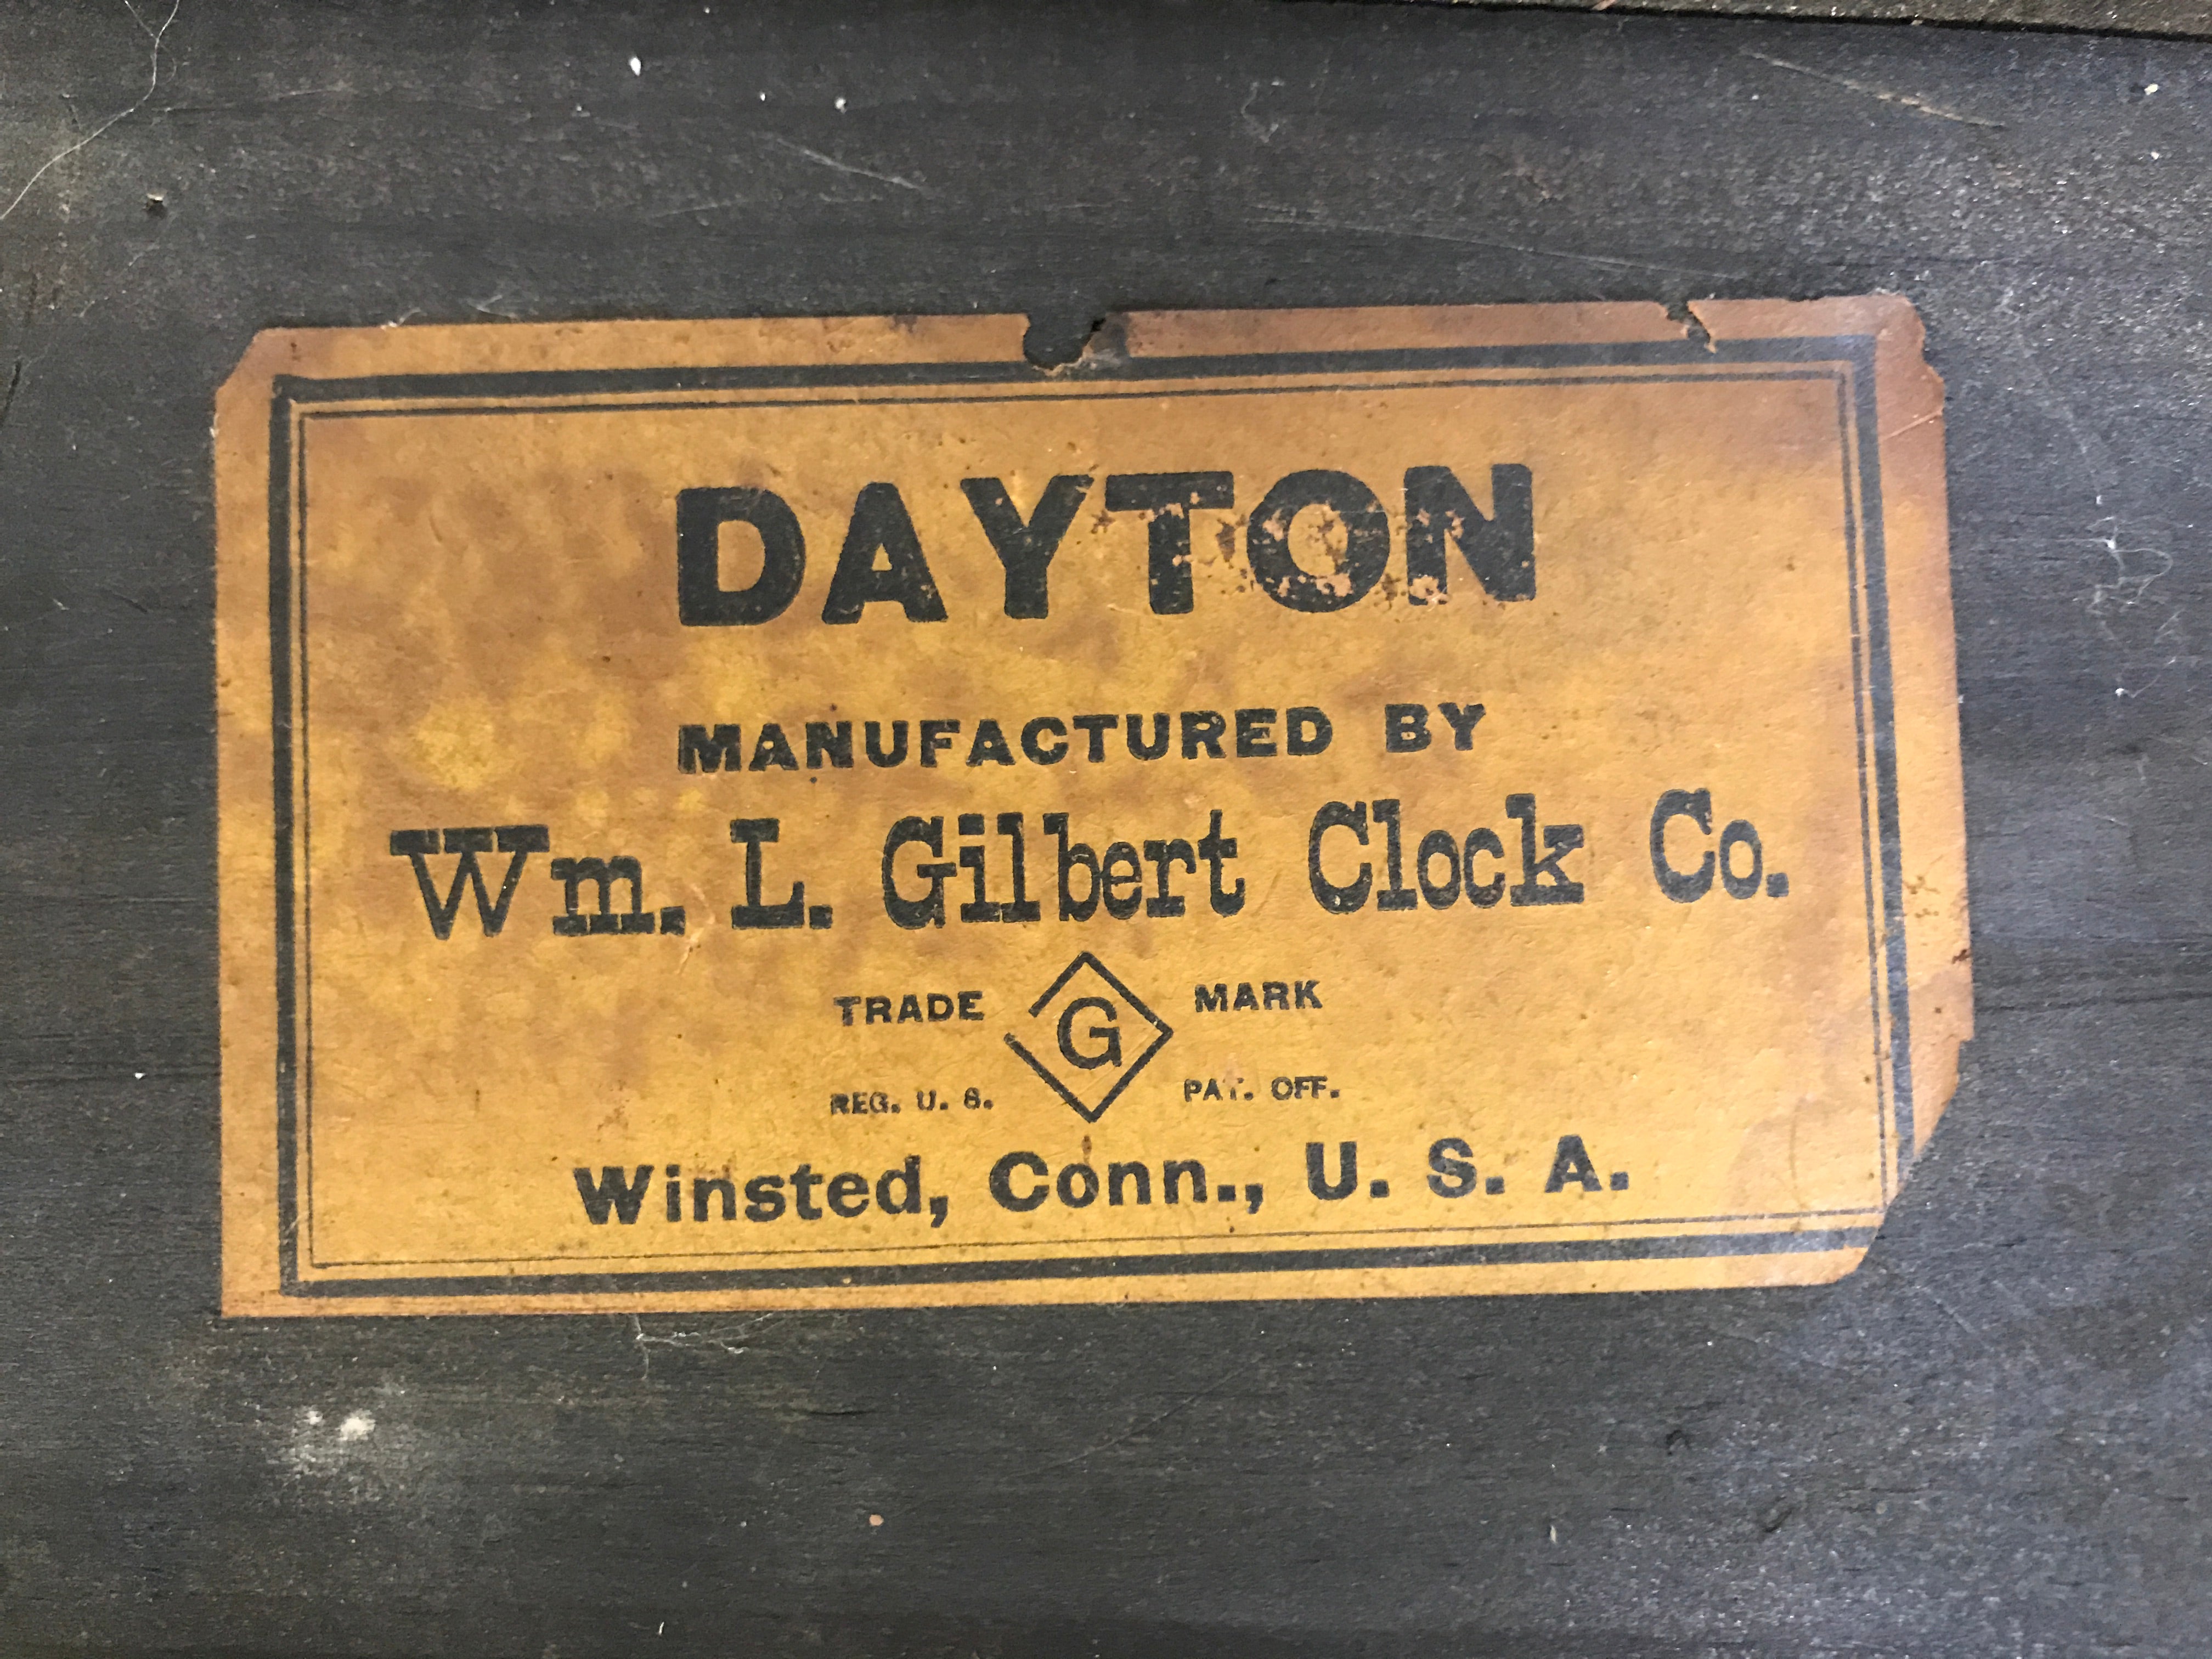 Antique Gilbert Mantel Clock | eXibit collection